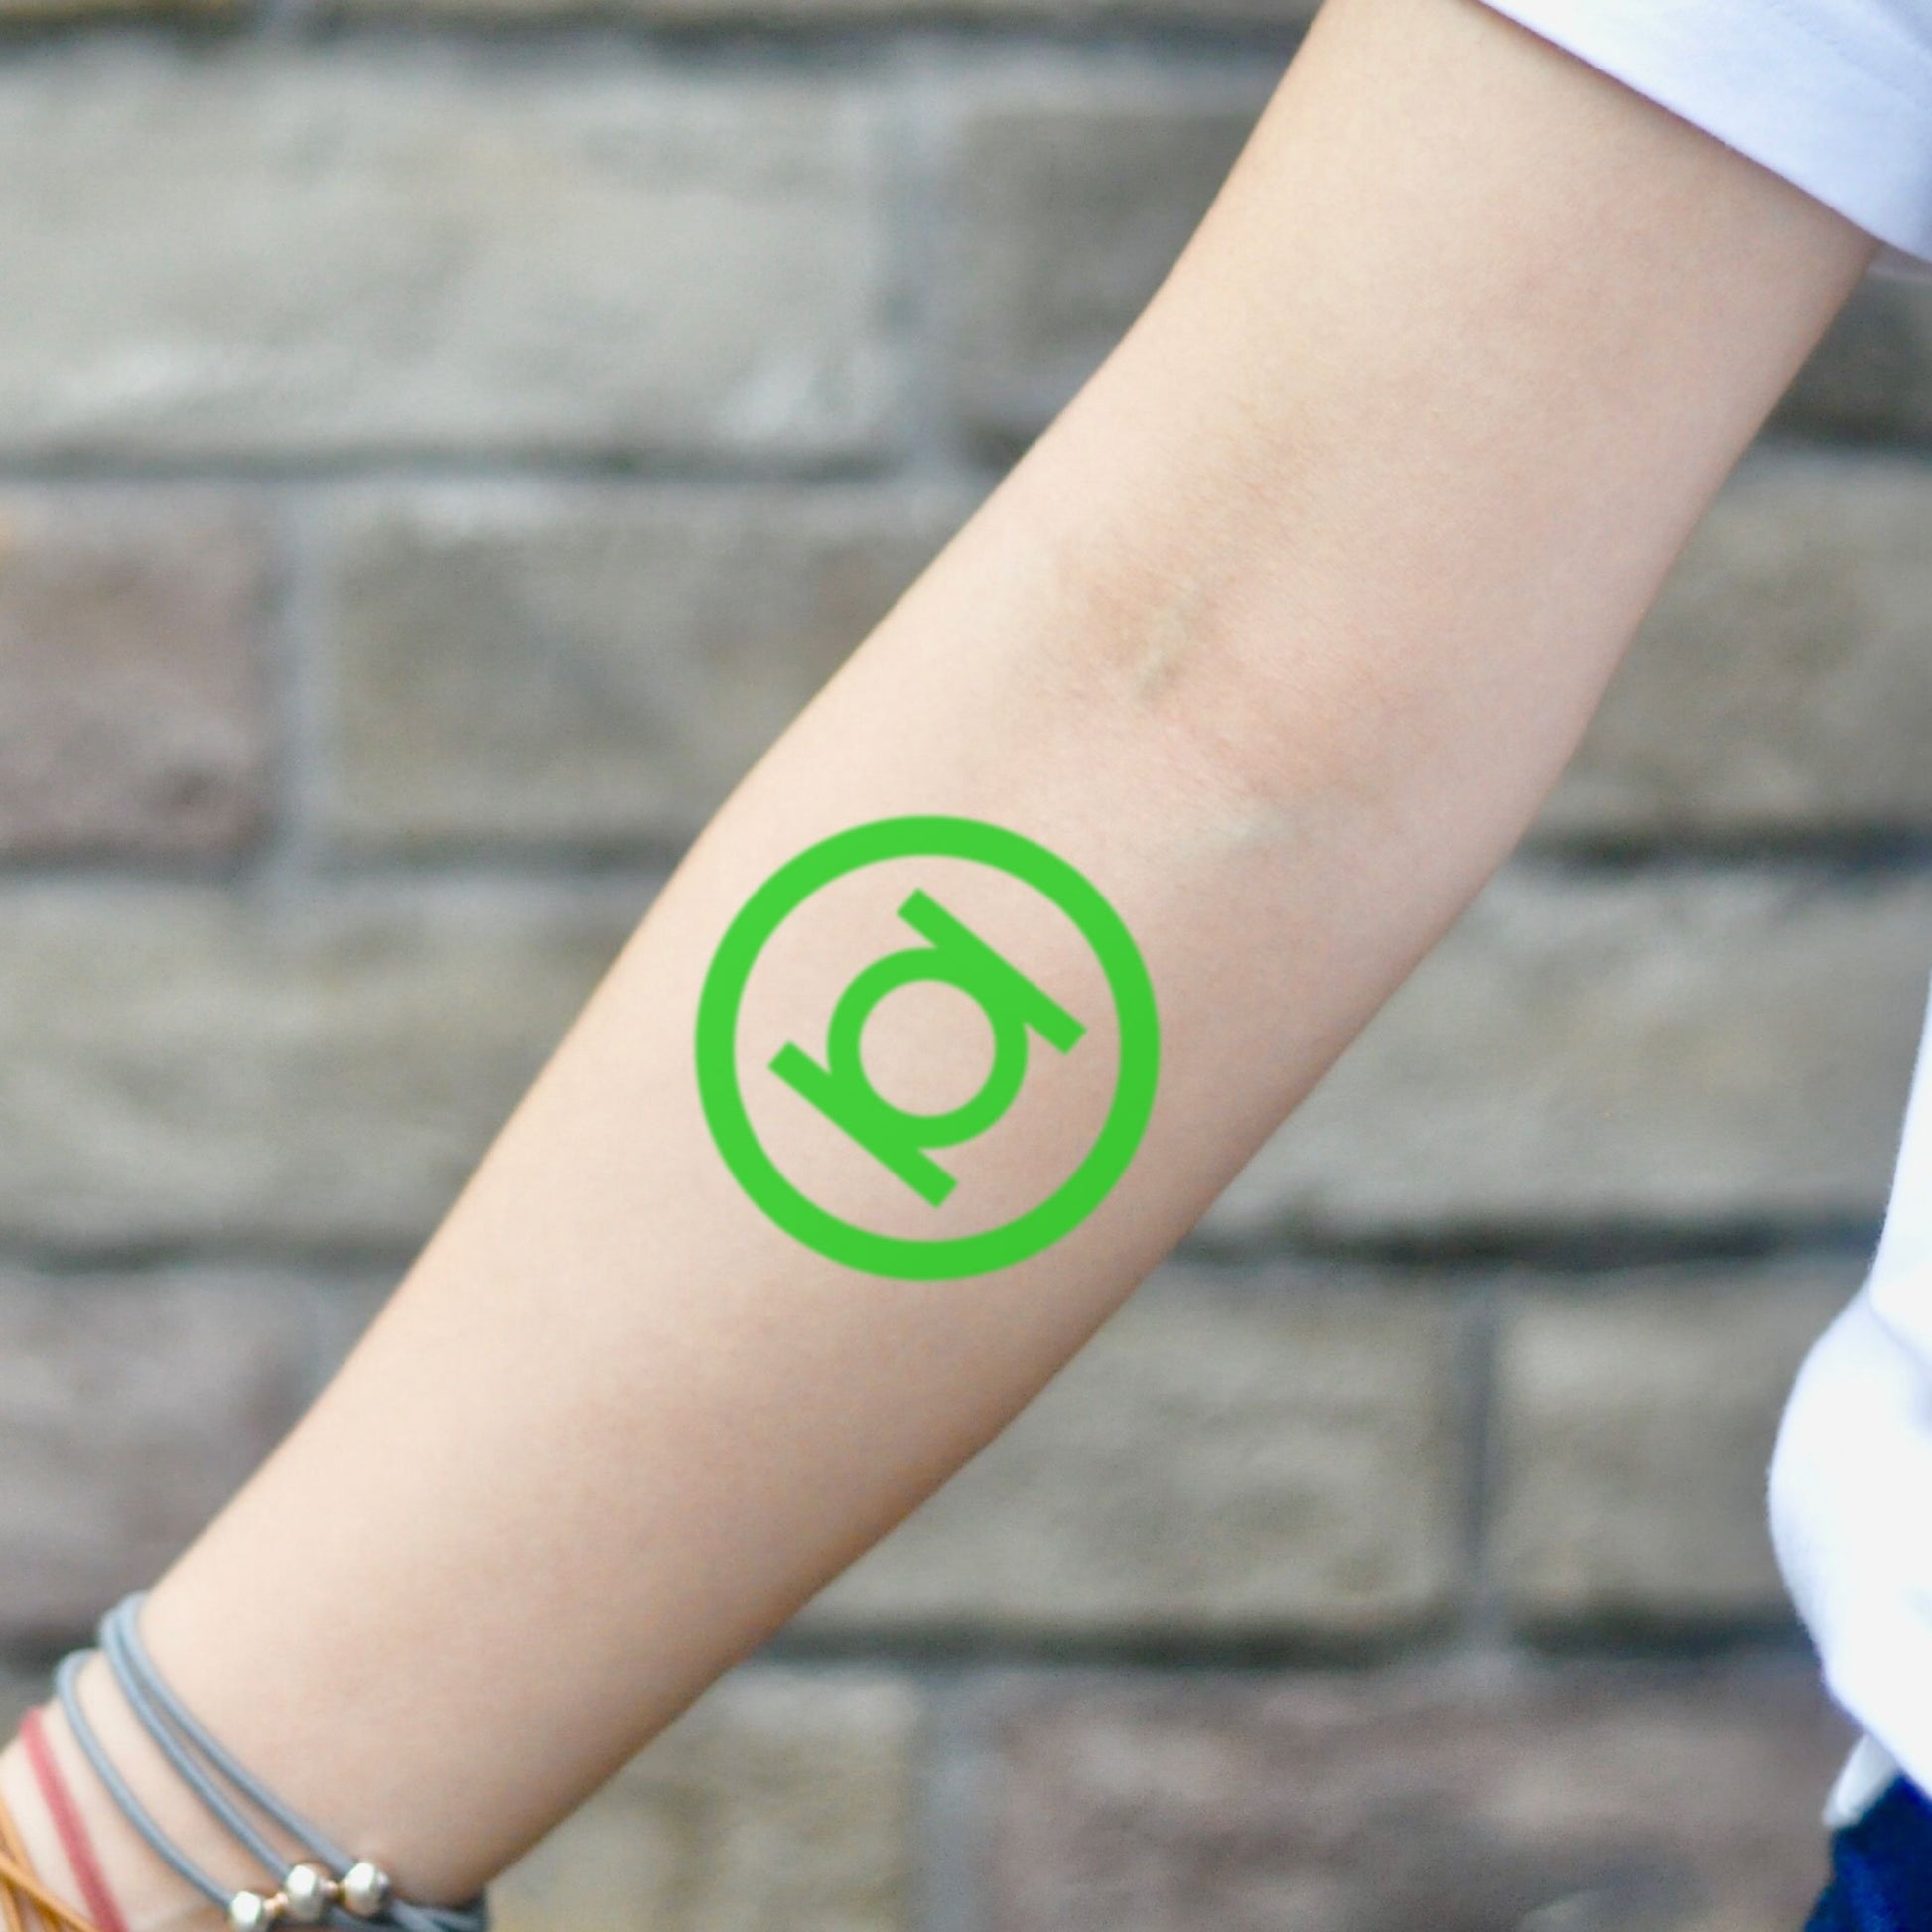 fake small green lantern color temporary tattoo sticker design idea on inner arm